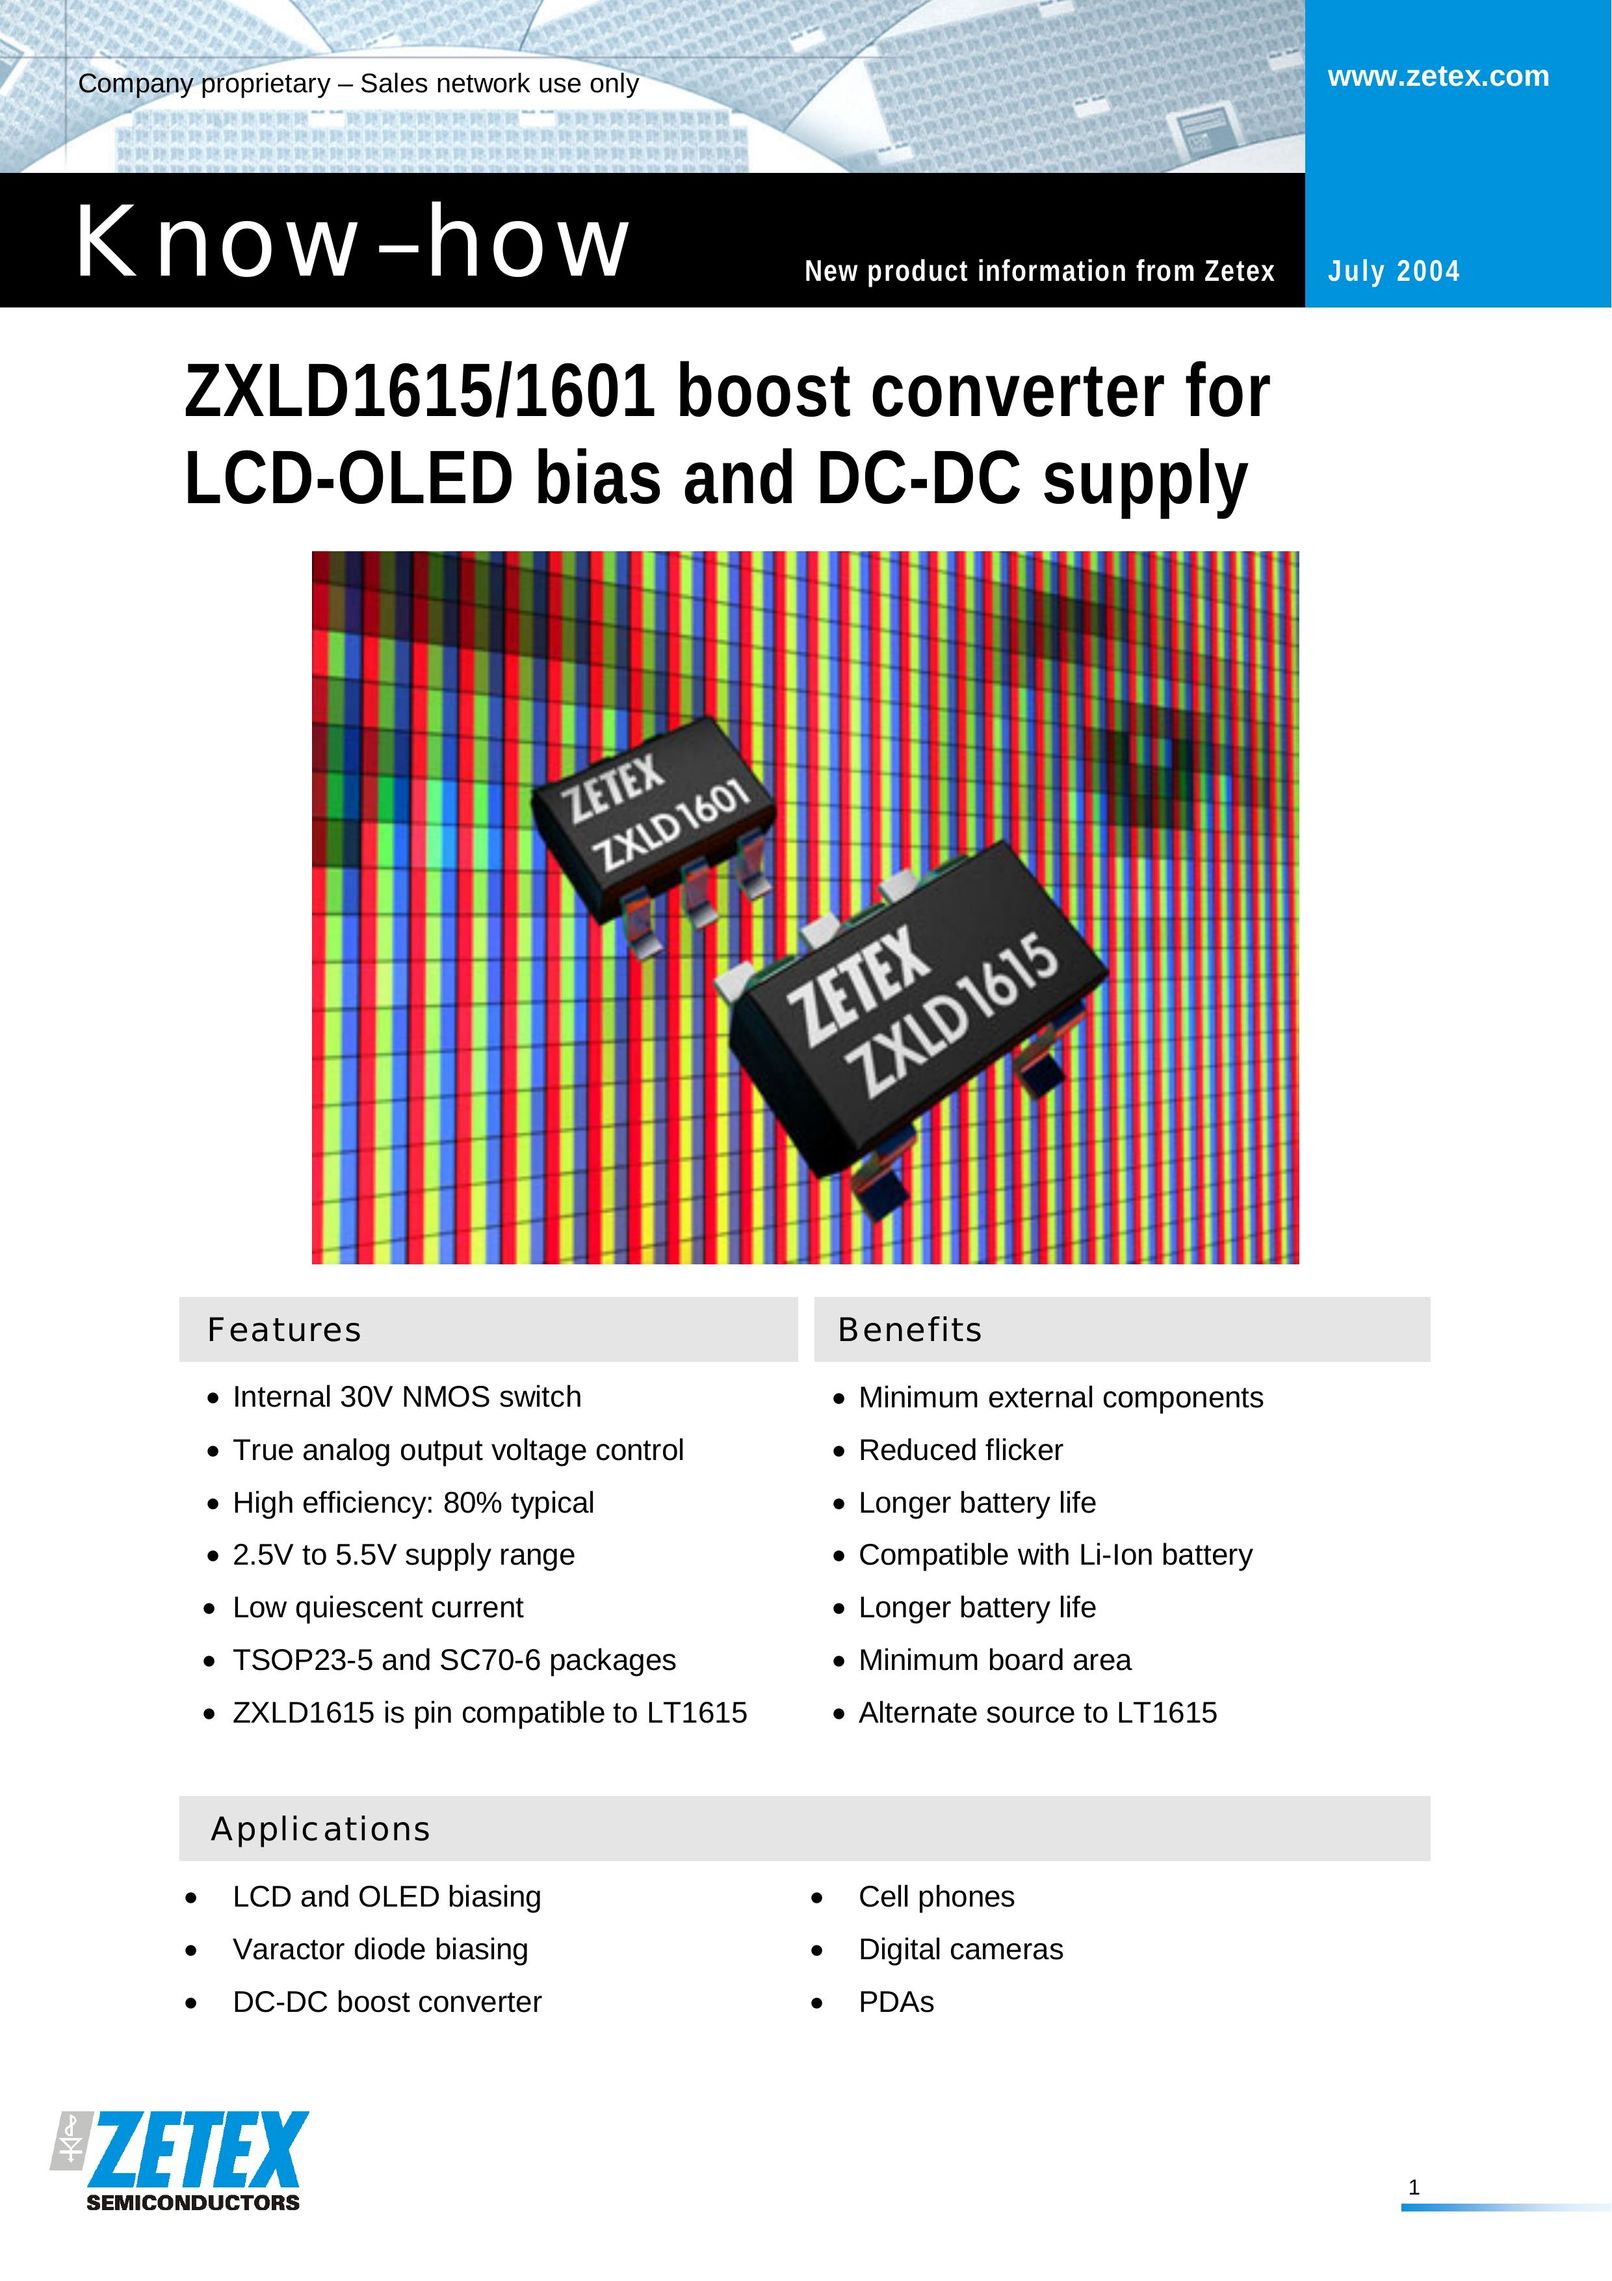 Zetex Semiconductors PLC ZXLD1615/1601 Power Supply User Manual